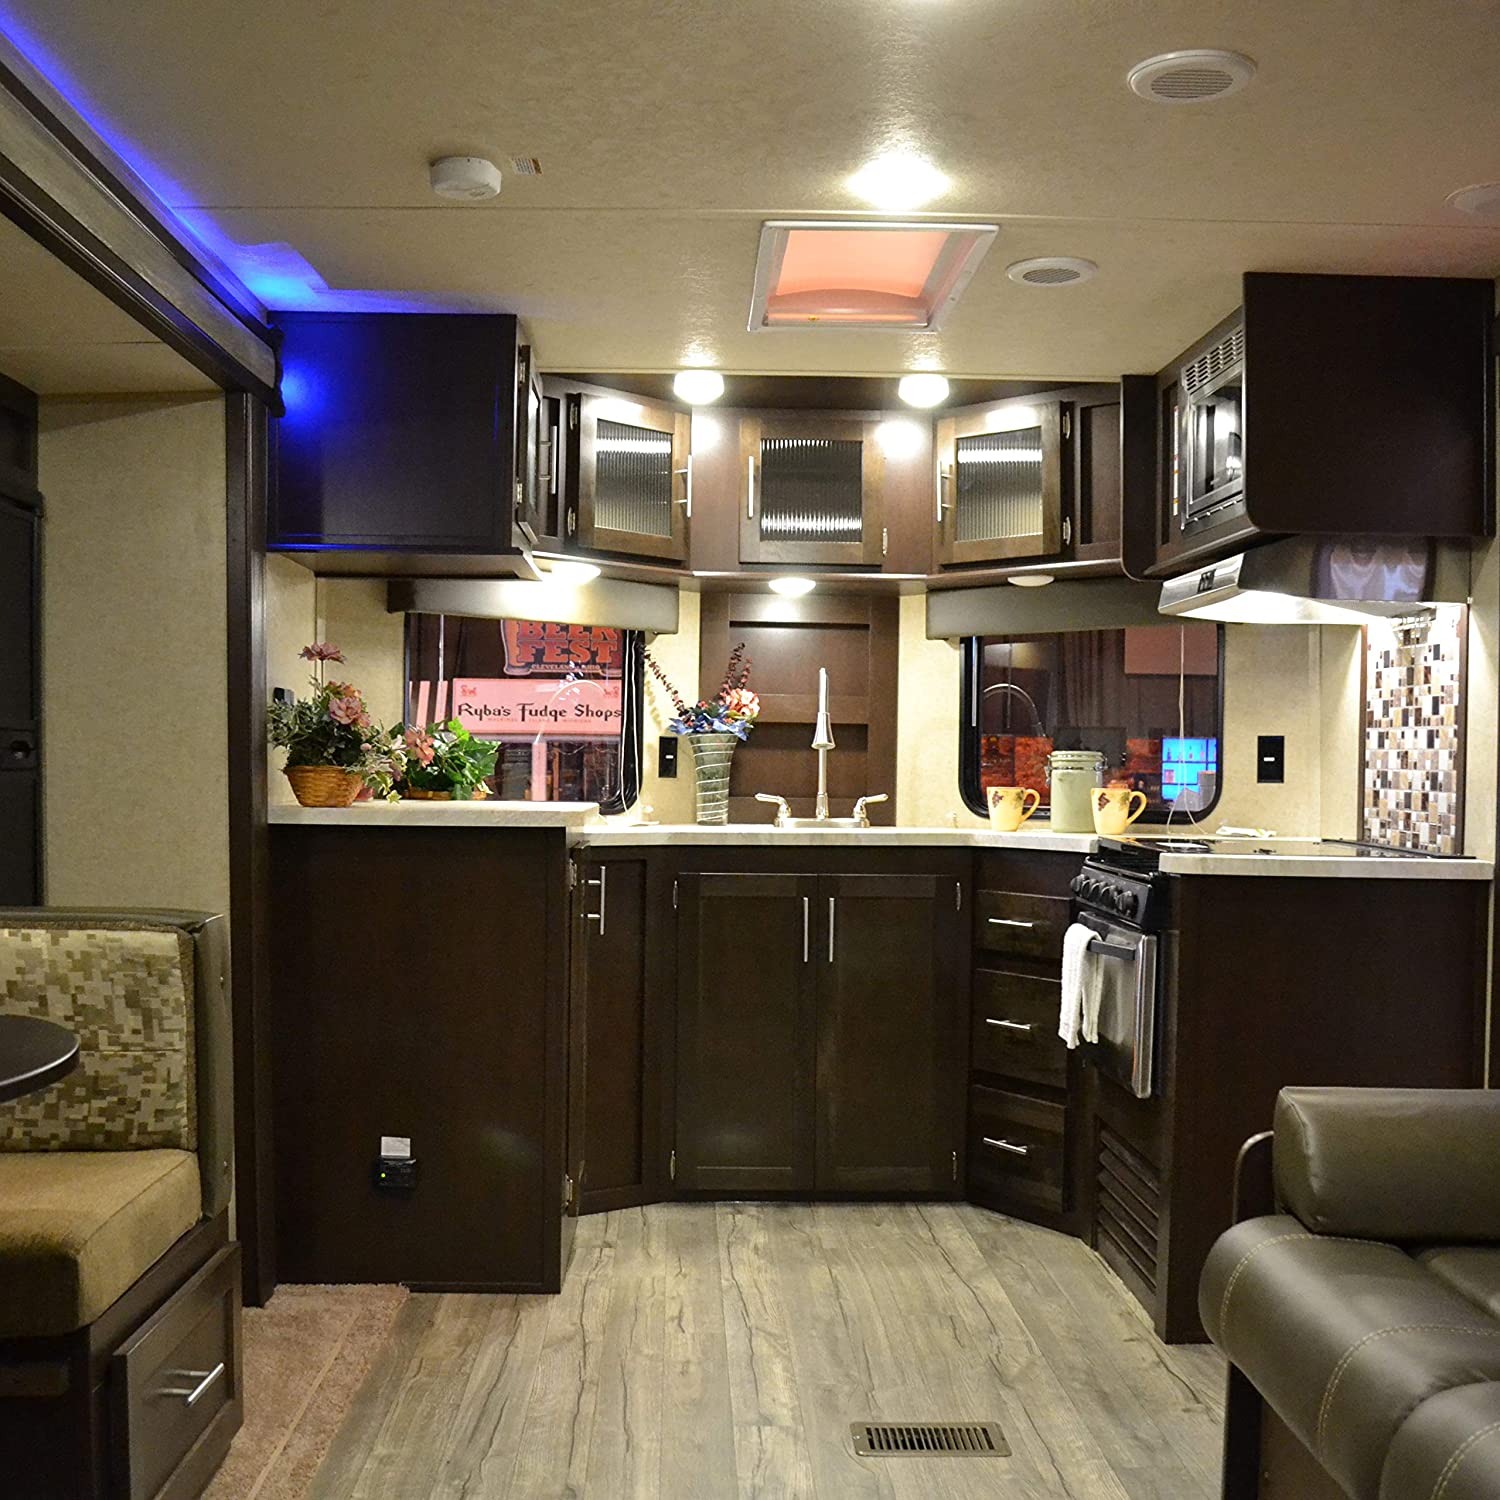 Modern RV interior with bright kitchen lights - upgrading rv interior lights to LED 